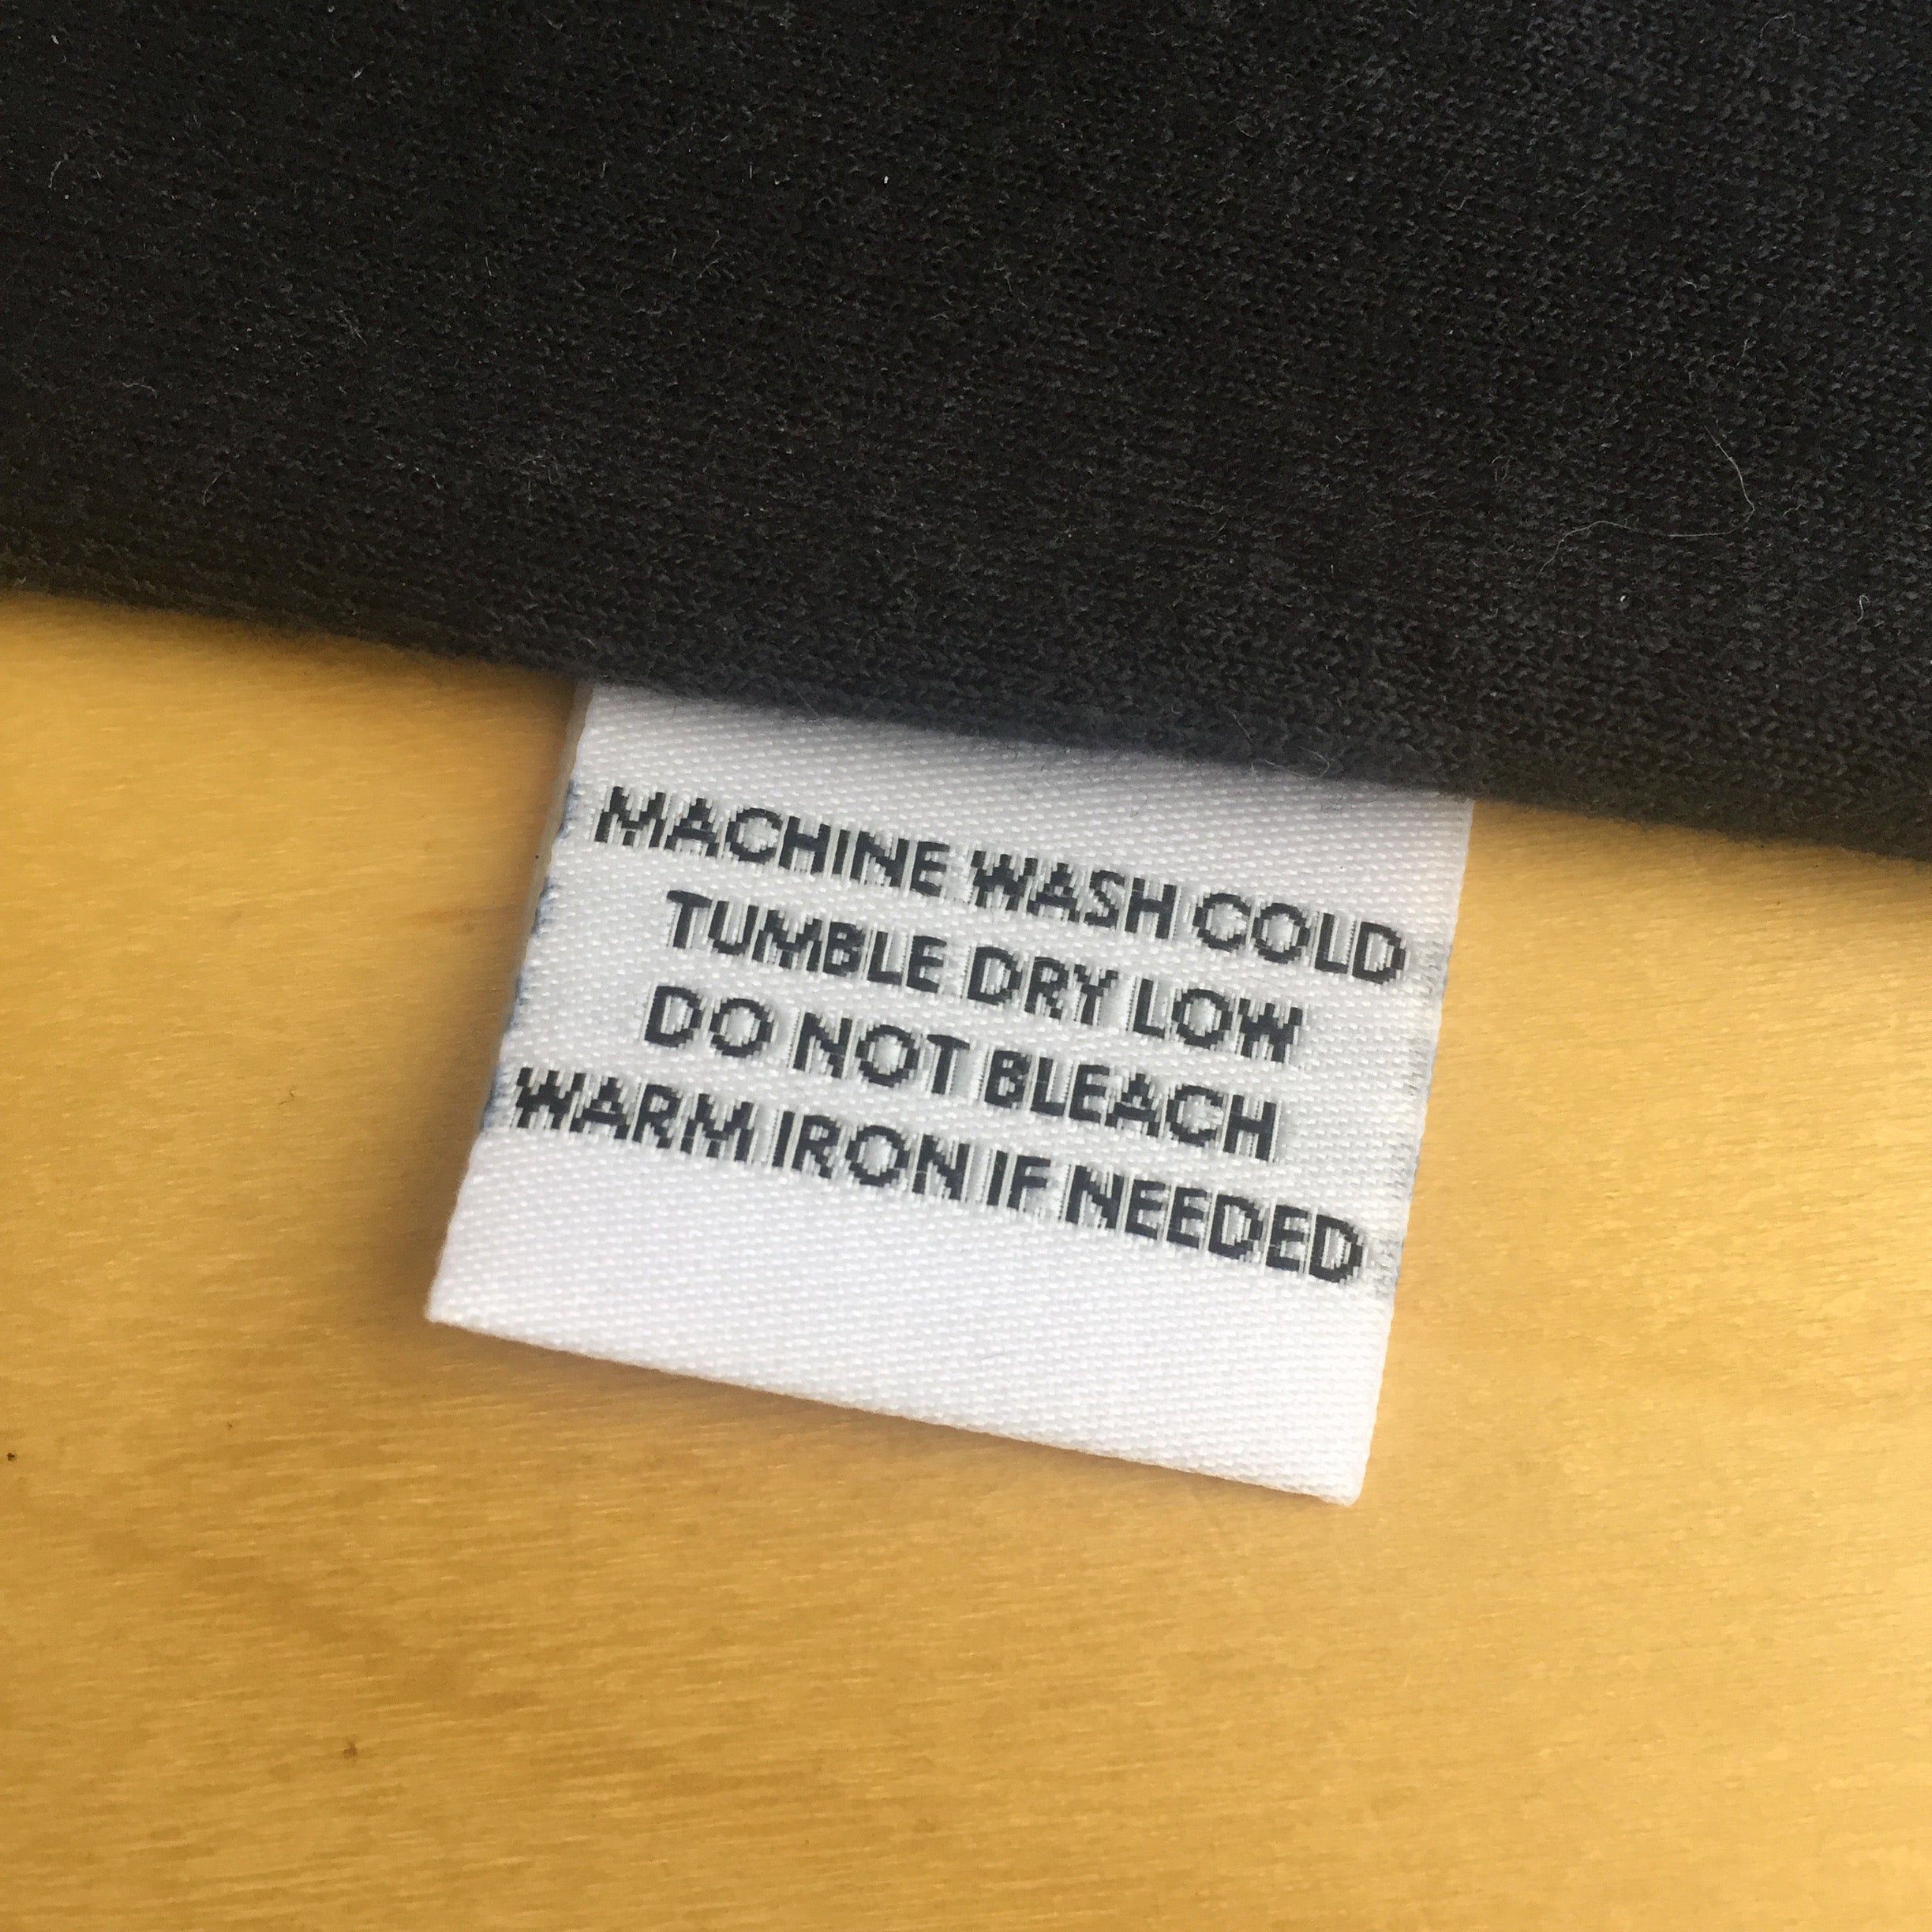 MACHINE WASH COLD - Garment Care Label - Cruz Label Store